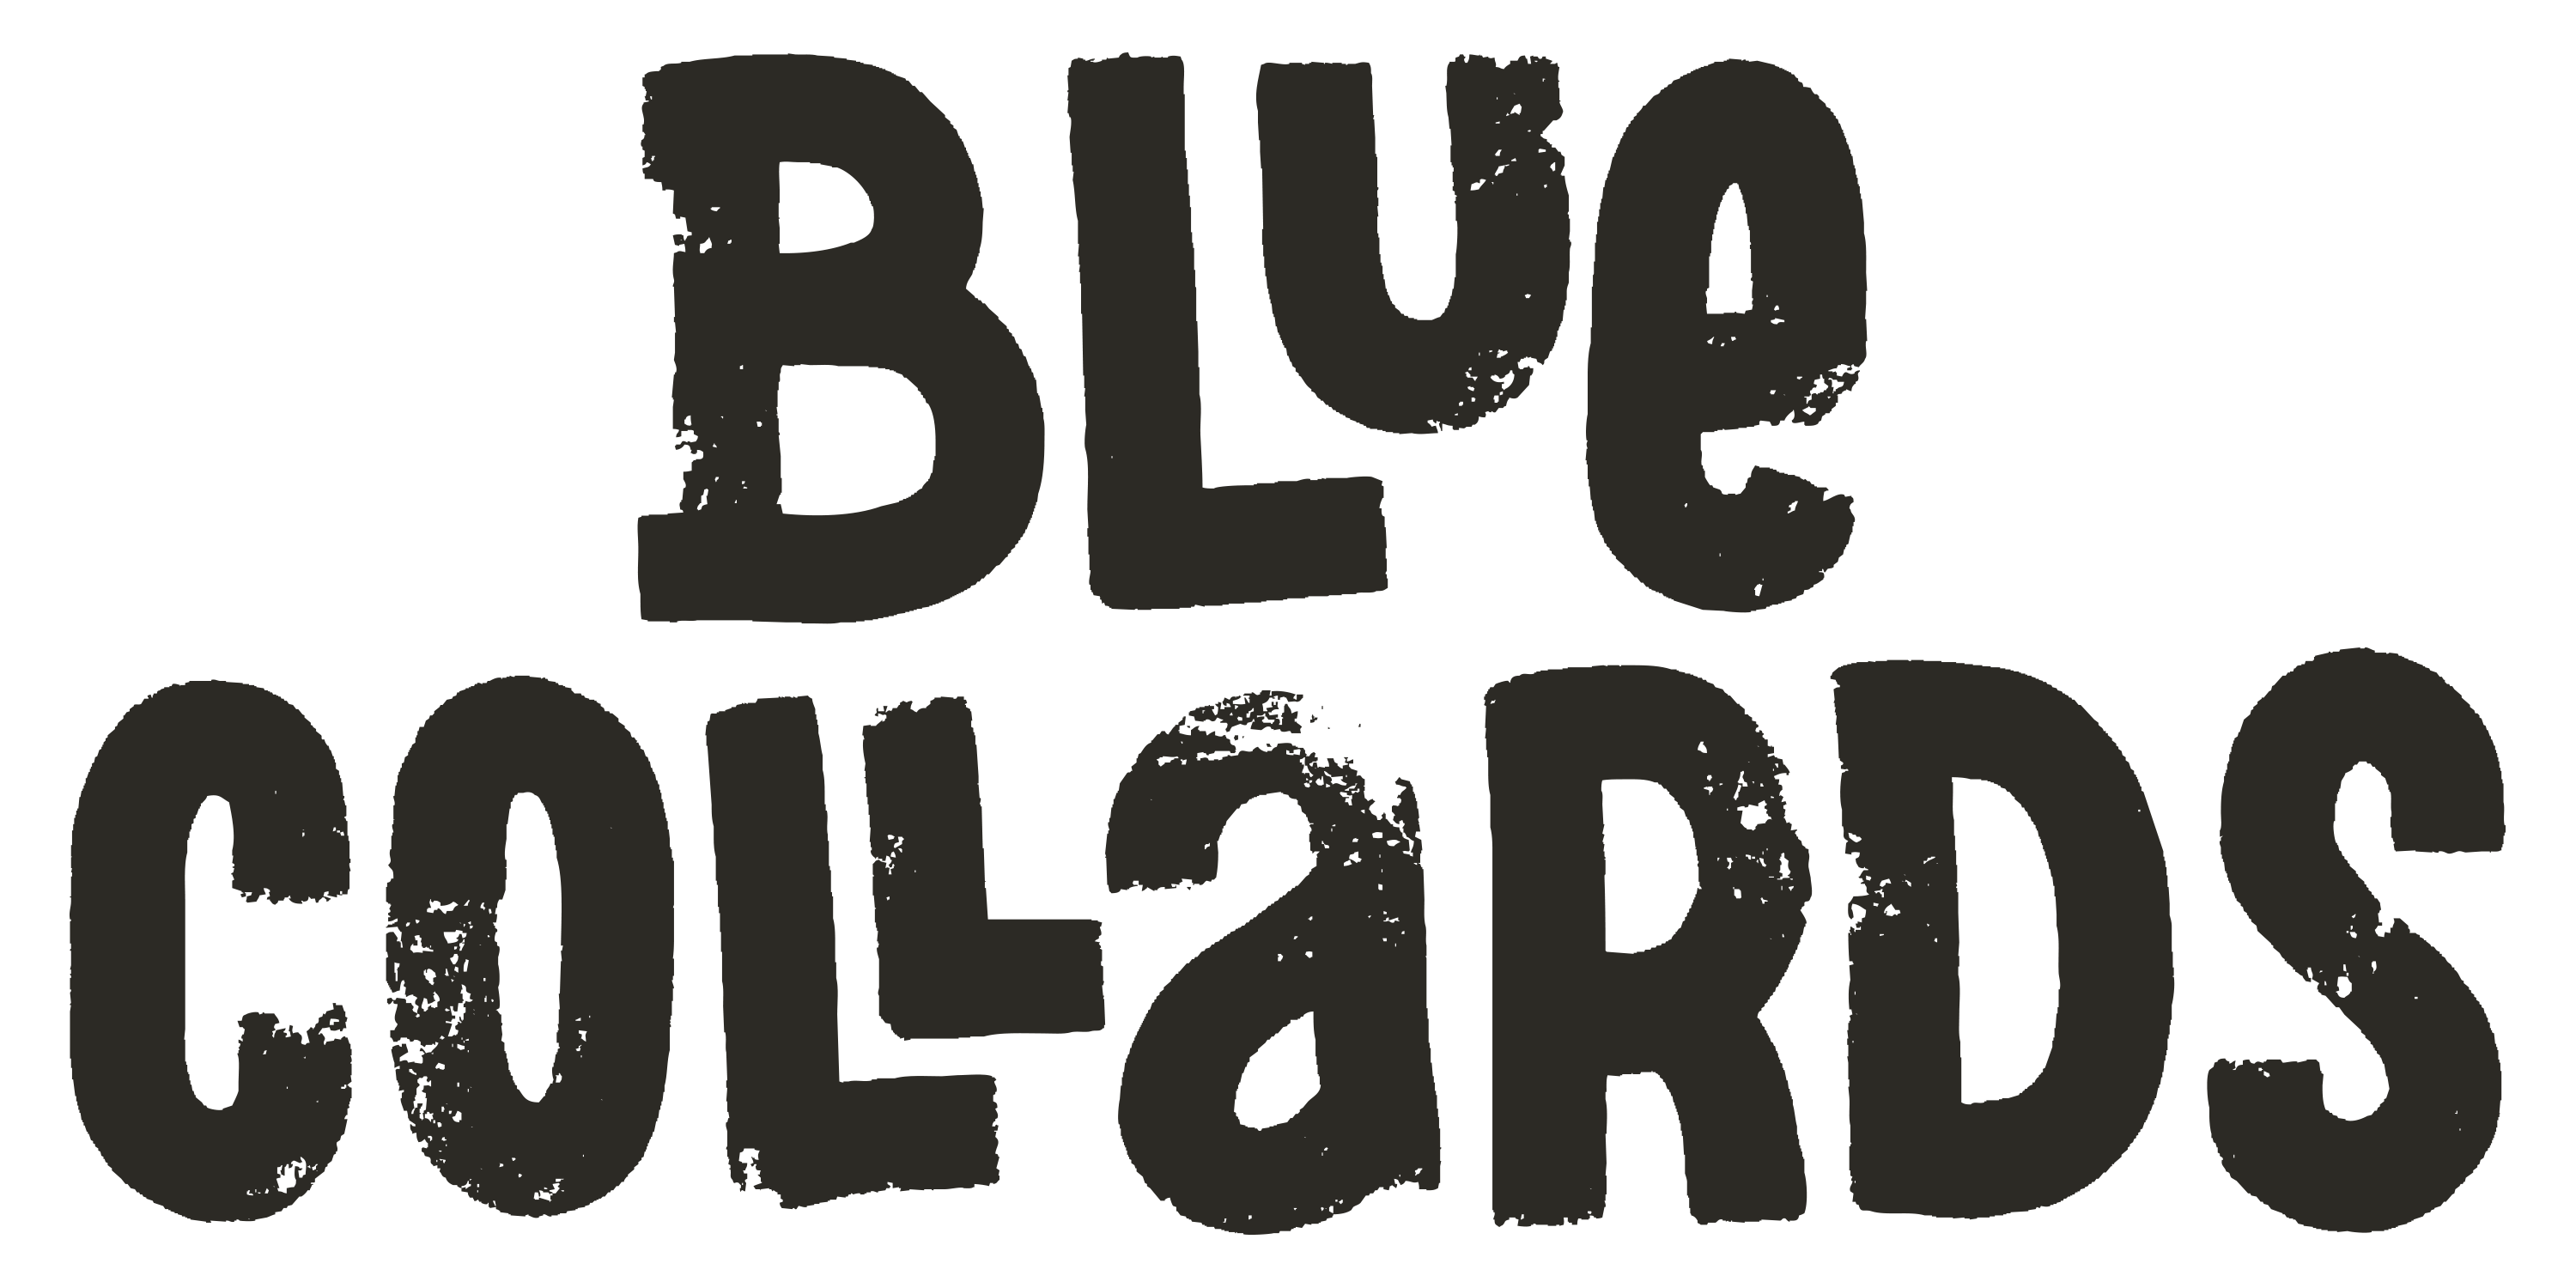 Bluecollardslogo black